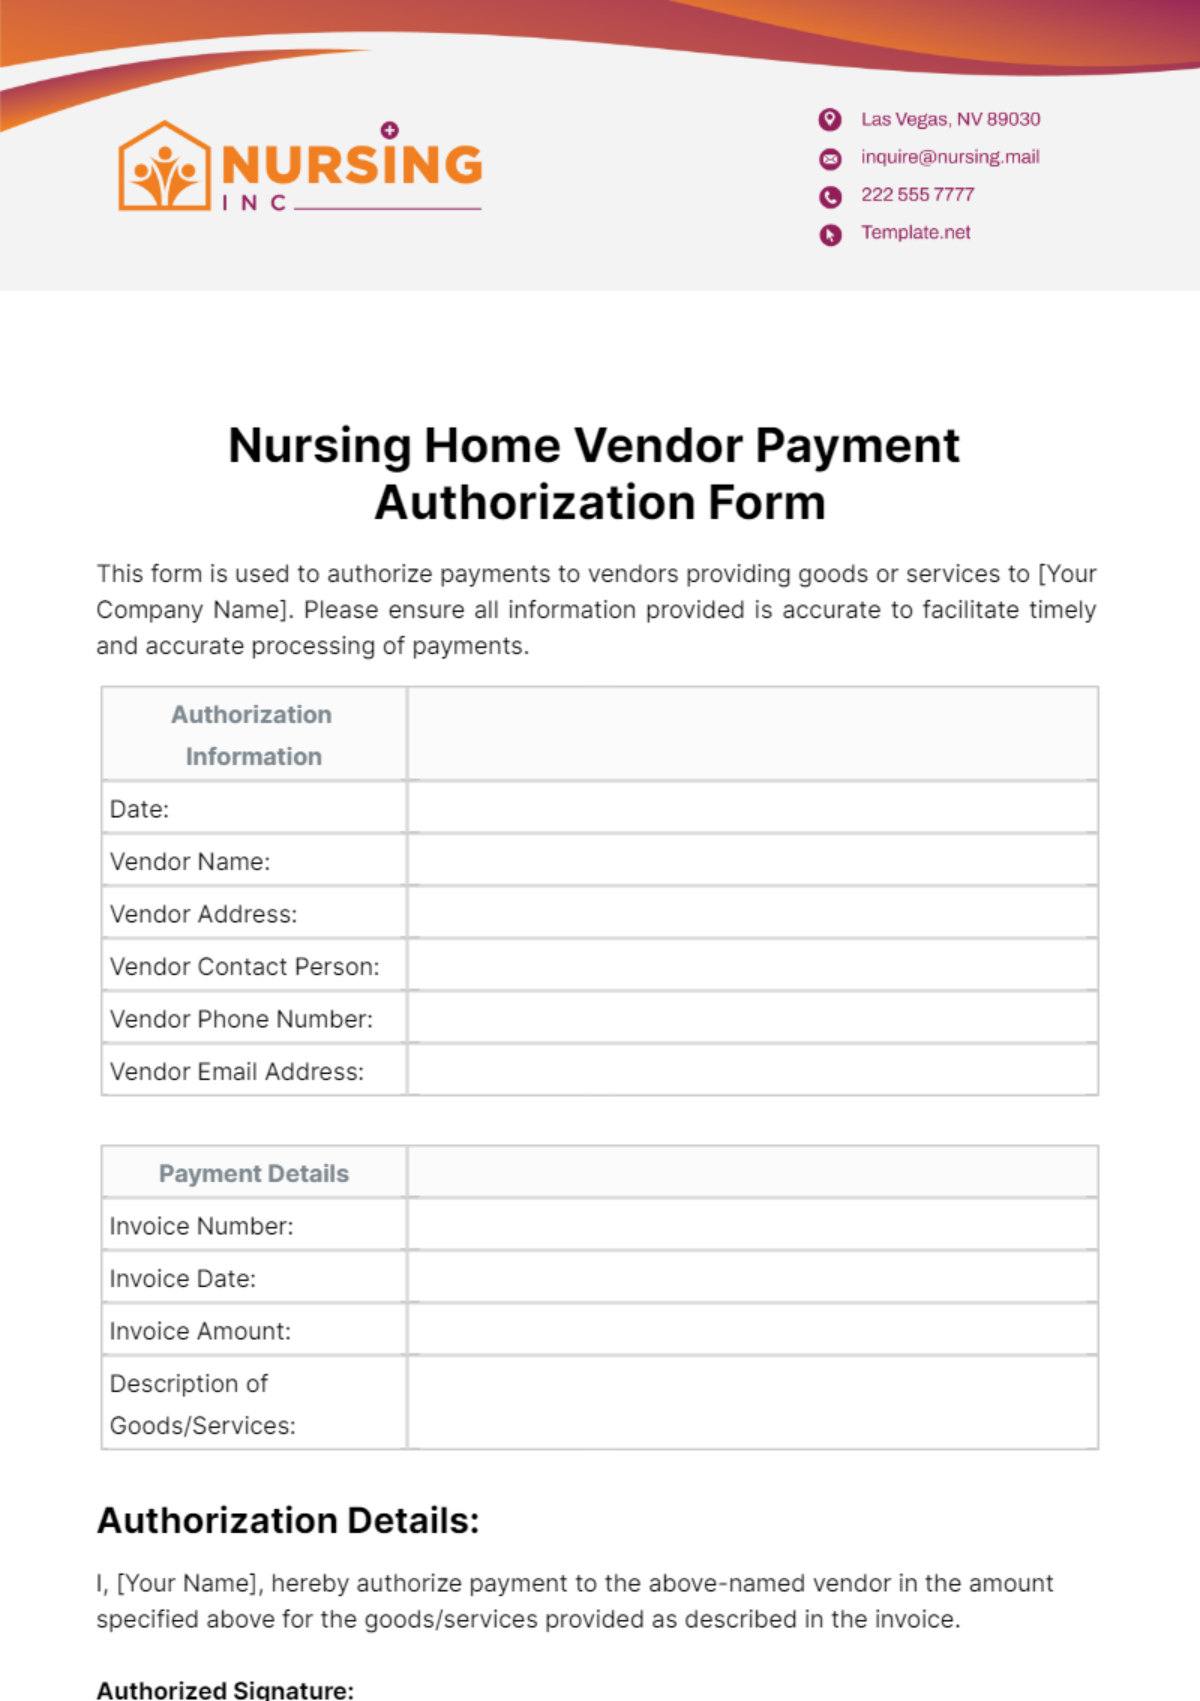 Free Nursing Home Vendor Payment Authorization Form Template